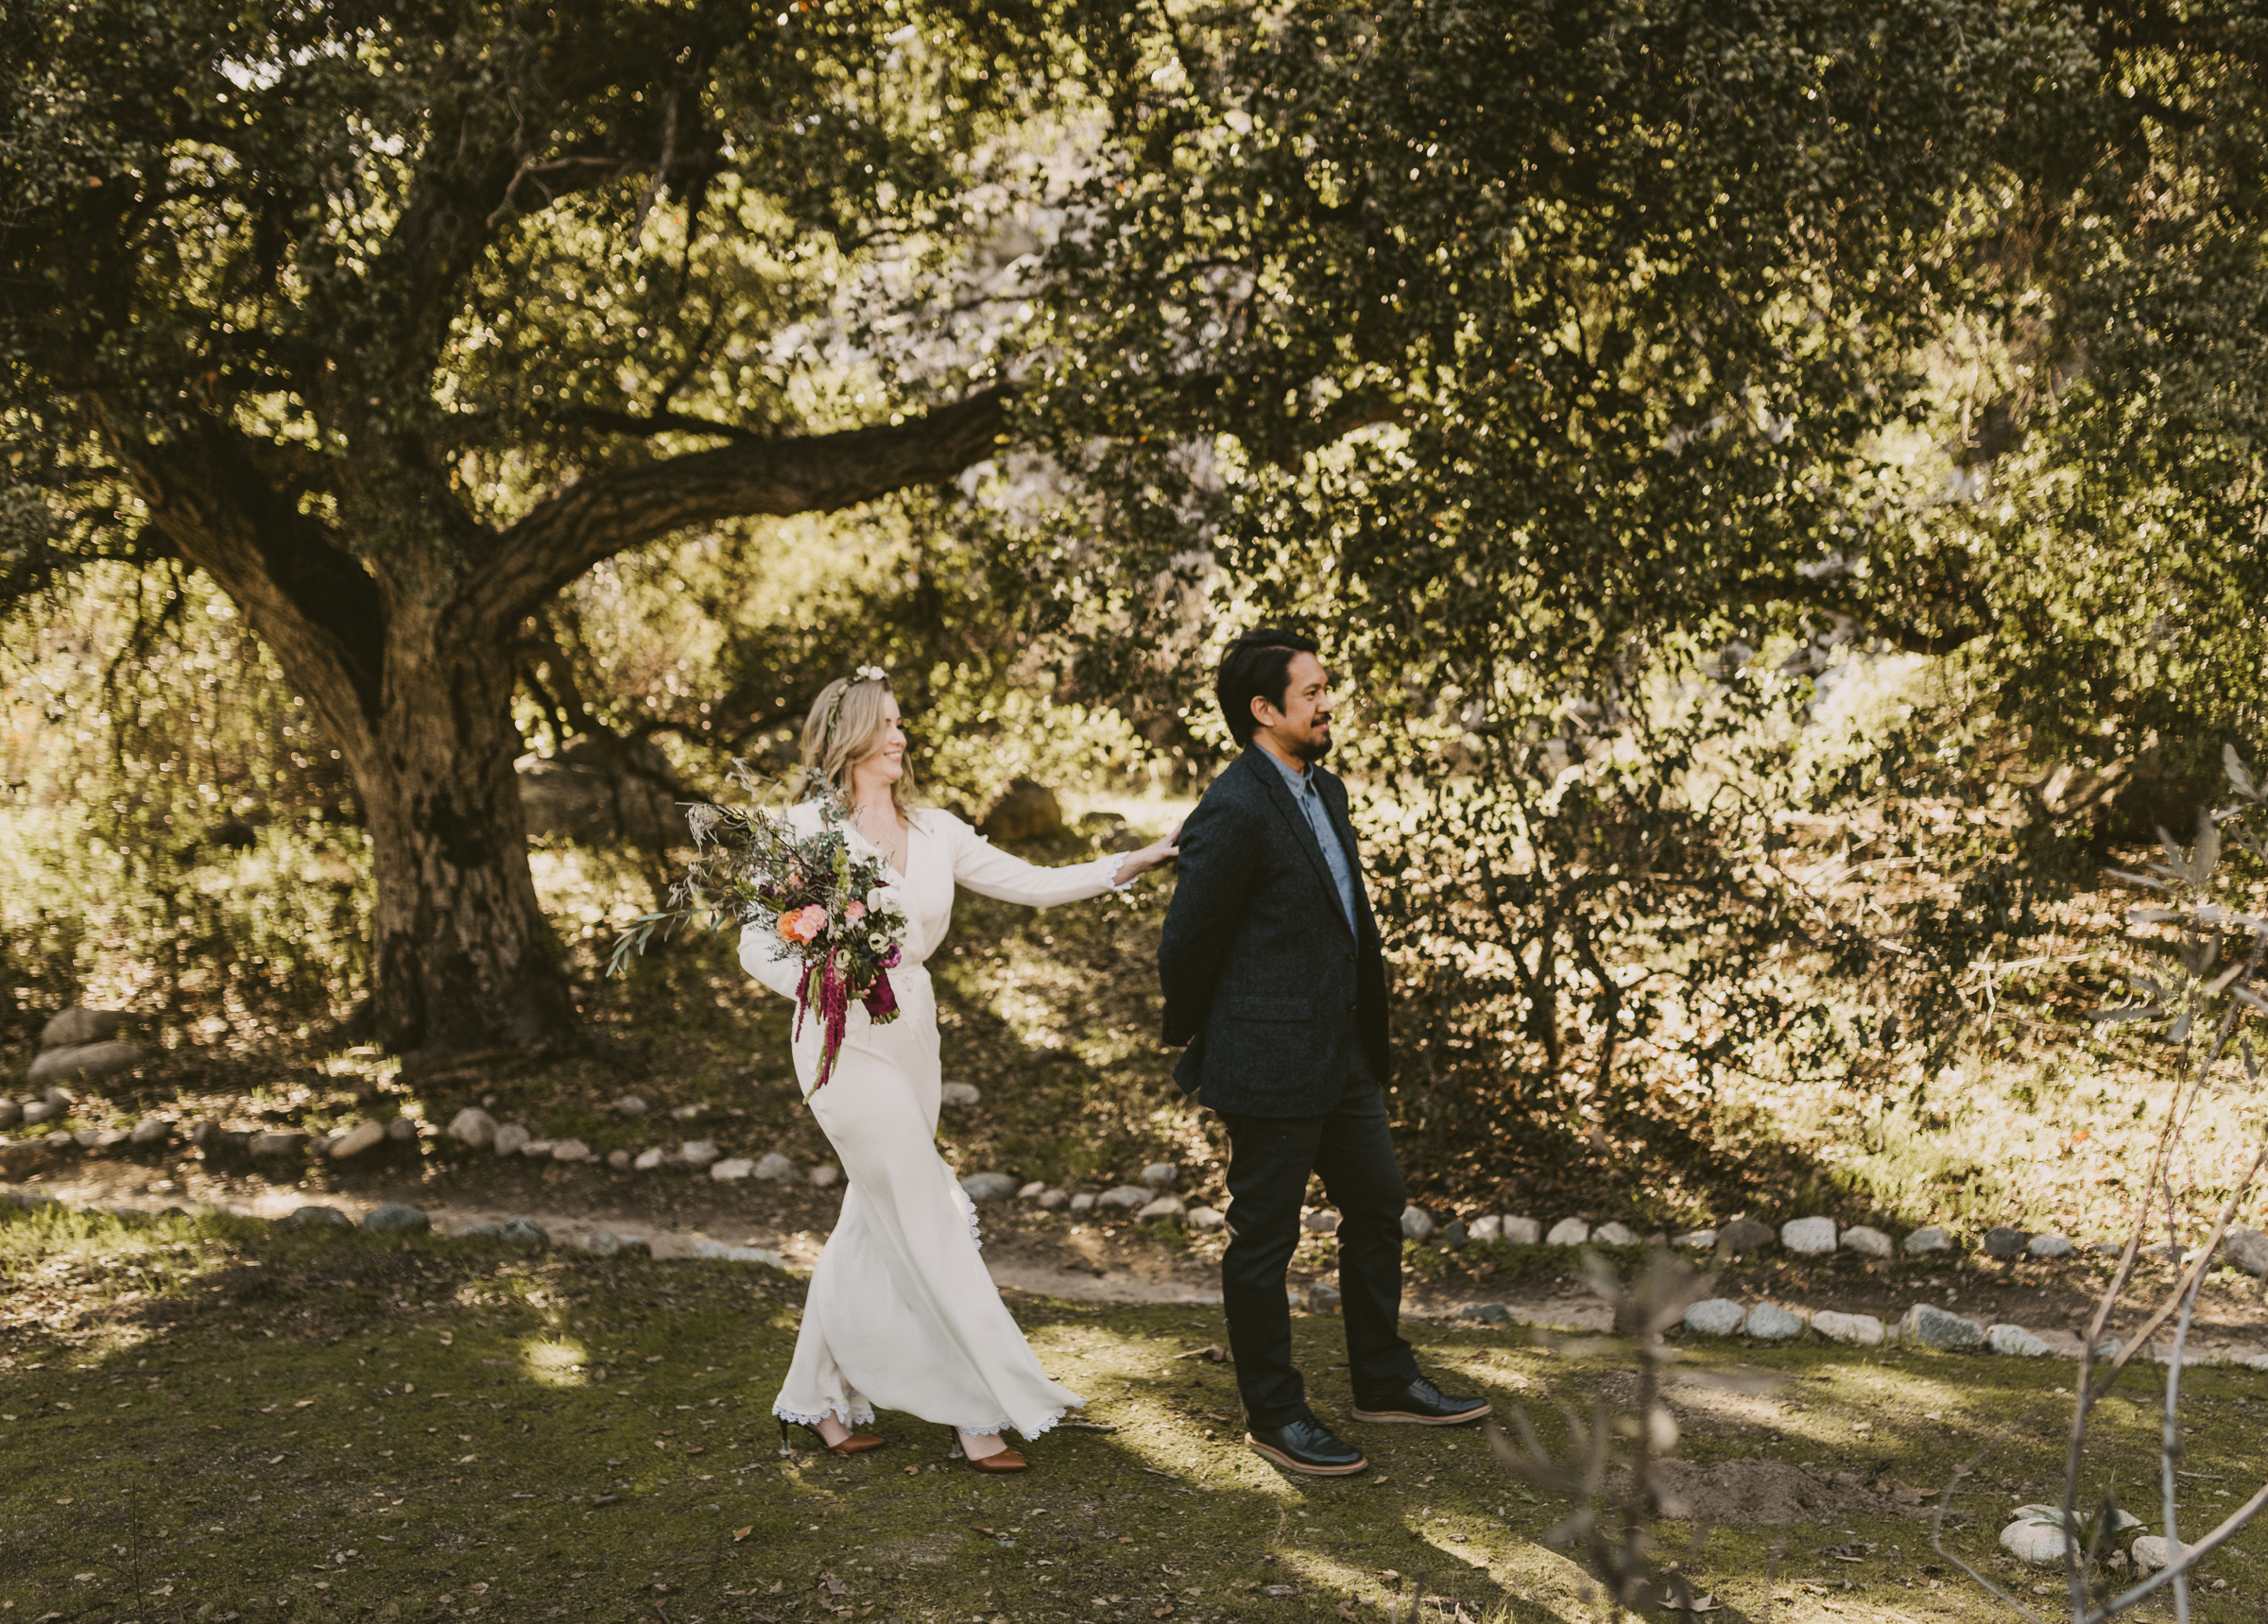 ©Isaiah + Taylor Photography - Intimate Elopement, Eaton Canyon, Los Angeles Wedding Photographer-9.jpg